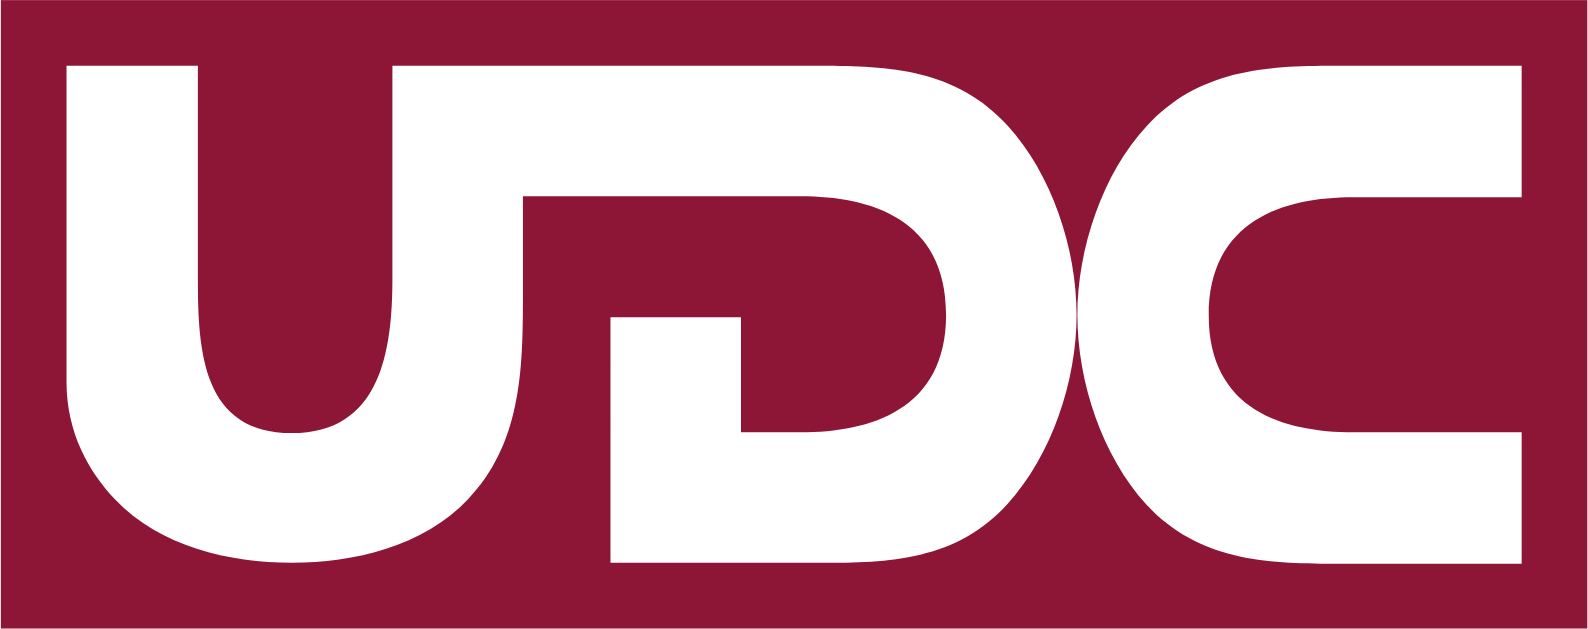 United Development Company logo (PNG transparent)